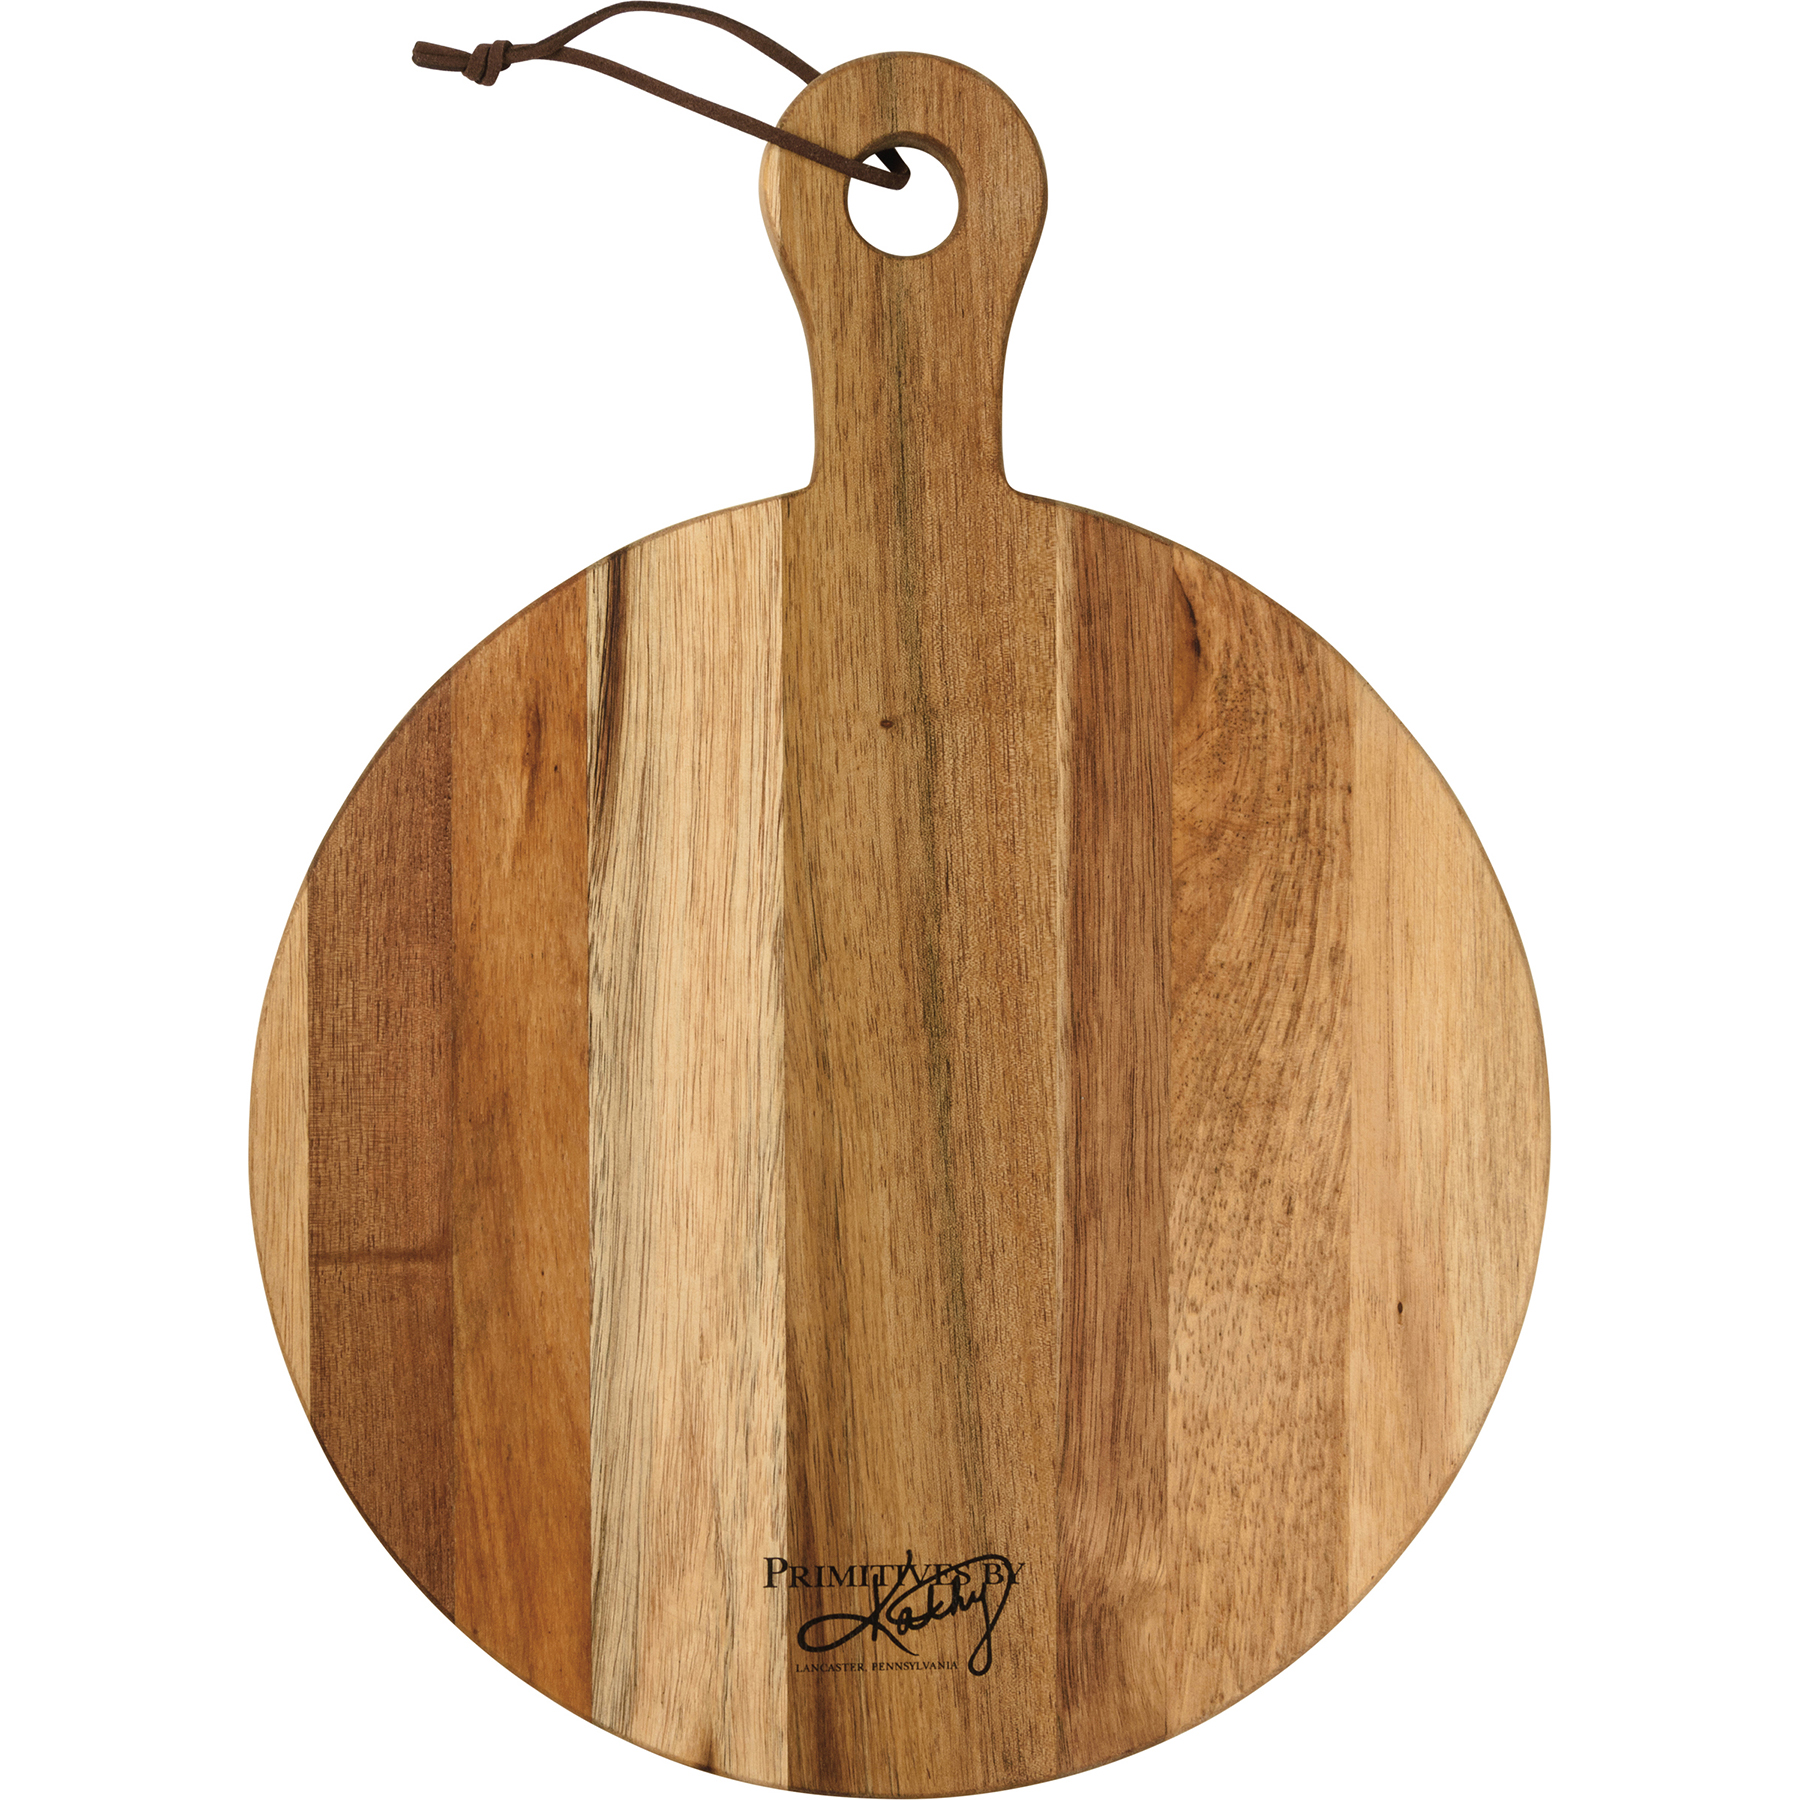 BarStash Wooden Cutting Board - Fine, Handmade Wood Boards for Kitchen, Bar  - Large Chopping Boards Made From Naturally Seasoned, Fine, Natural Grain